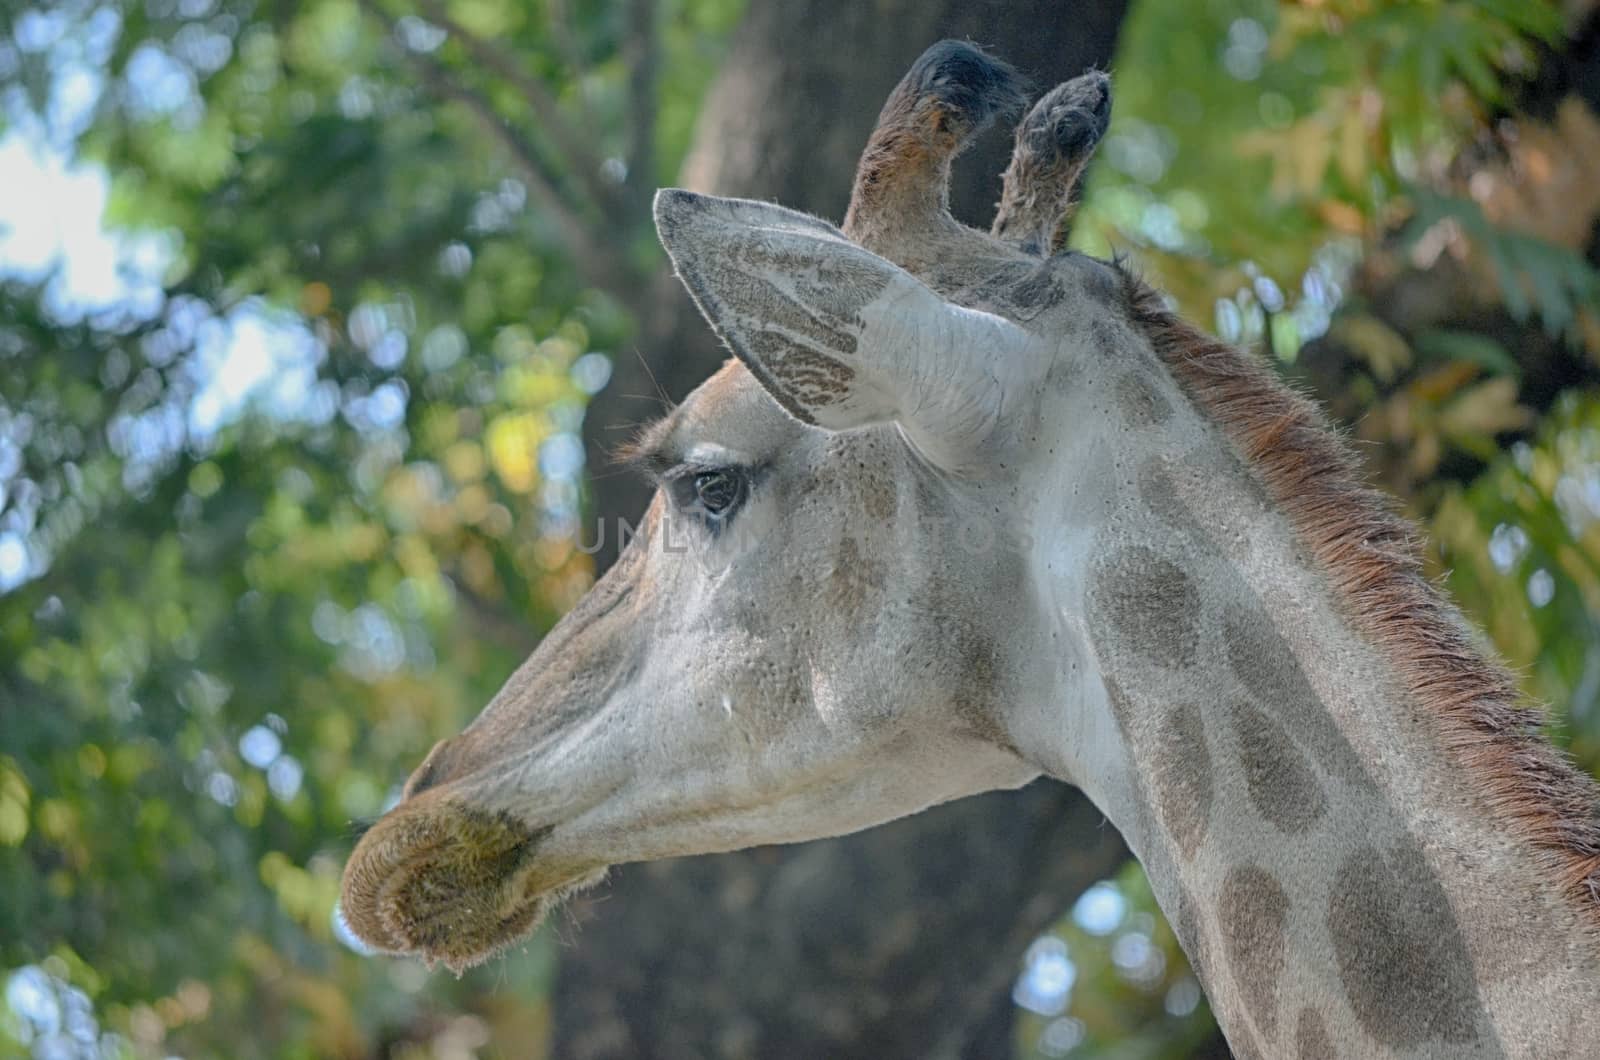 Closeup view of giraffe face.